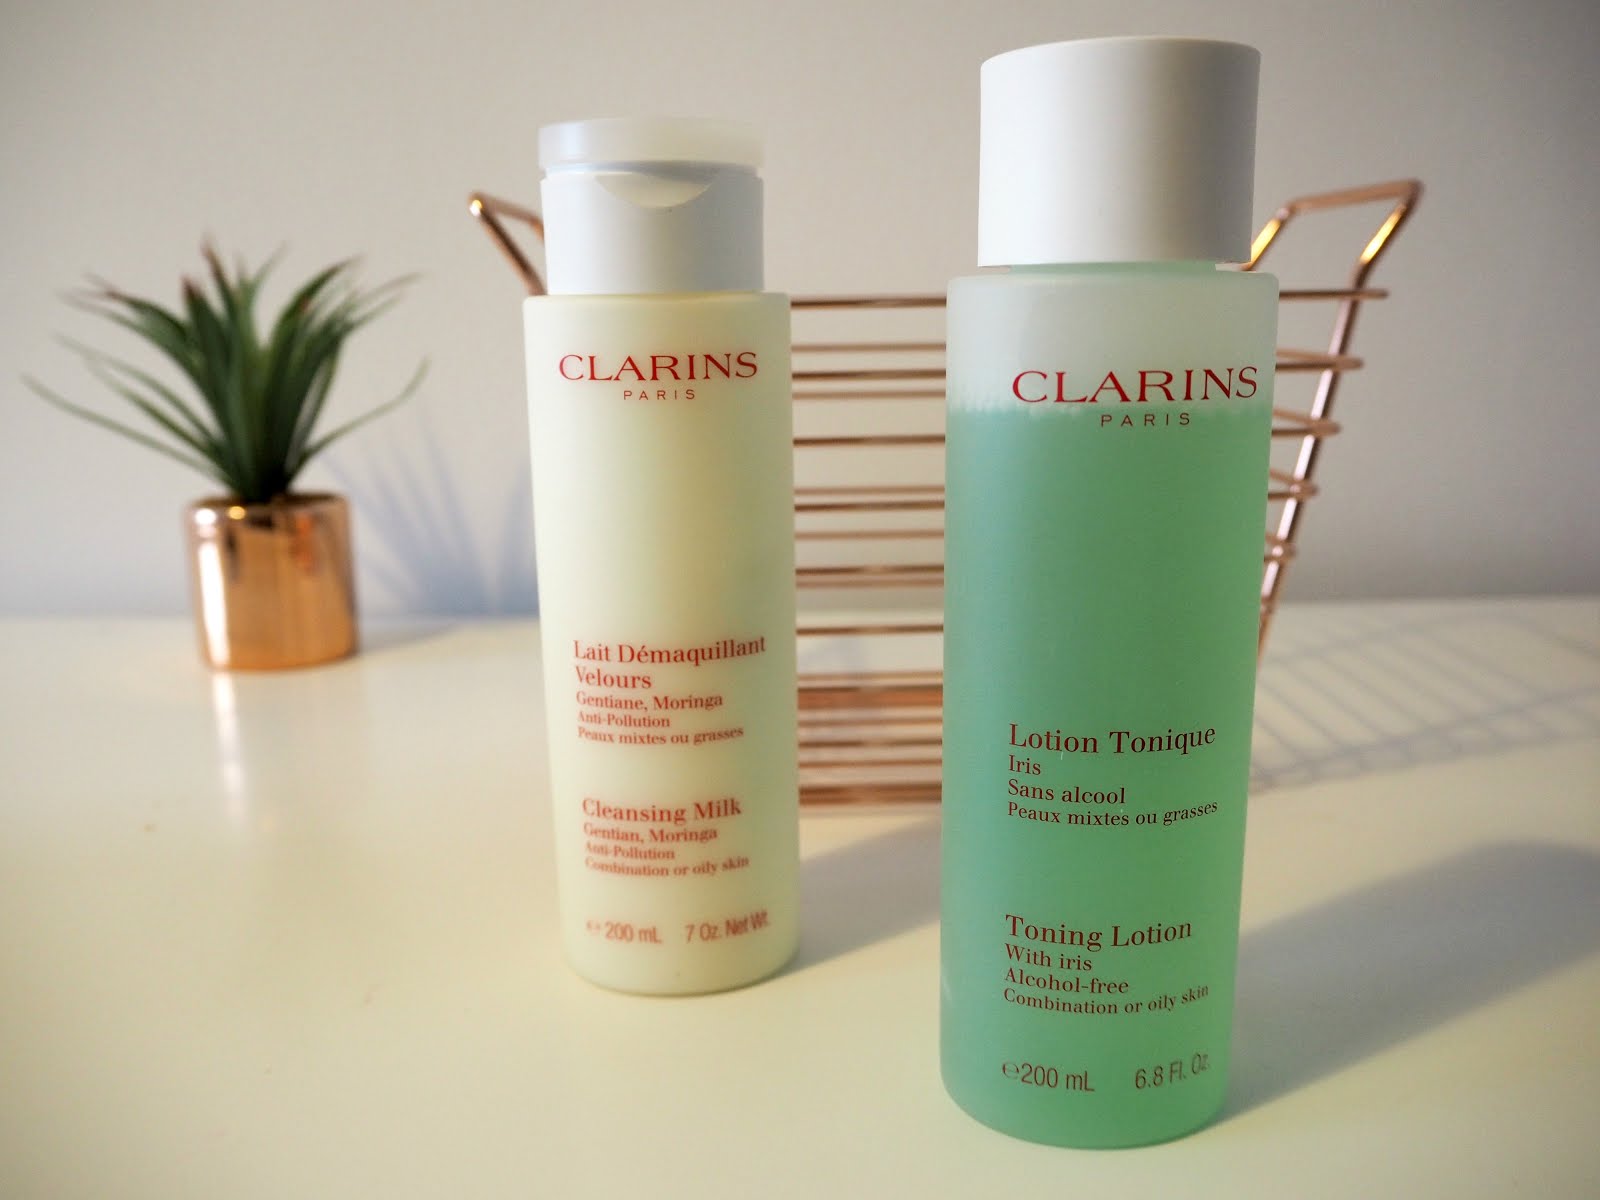 Til fods cement menneskelige ressourcer Review: Clarins' Cleanser & Toner Duo for Combination/Oily Skin - Prime +  Dine